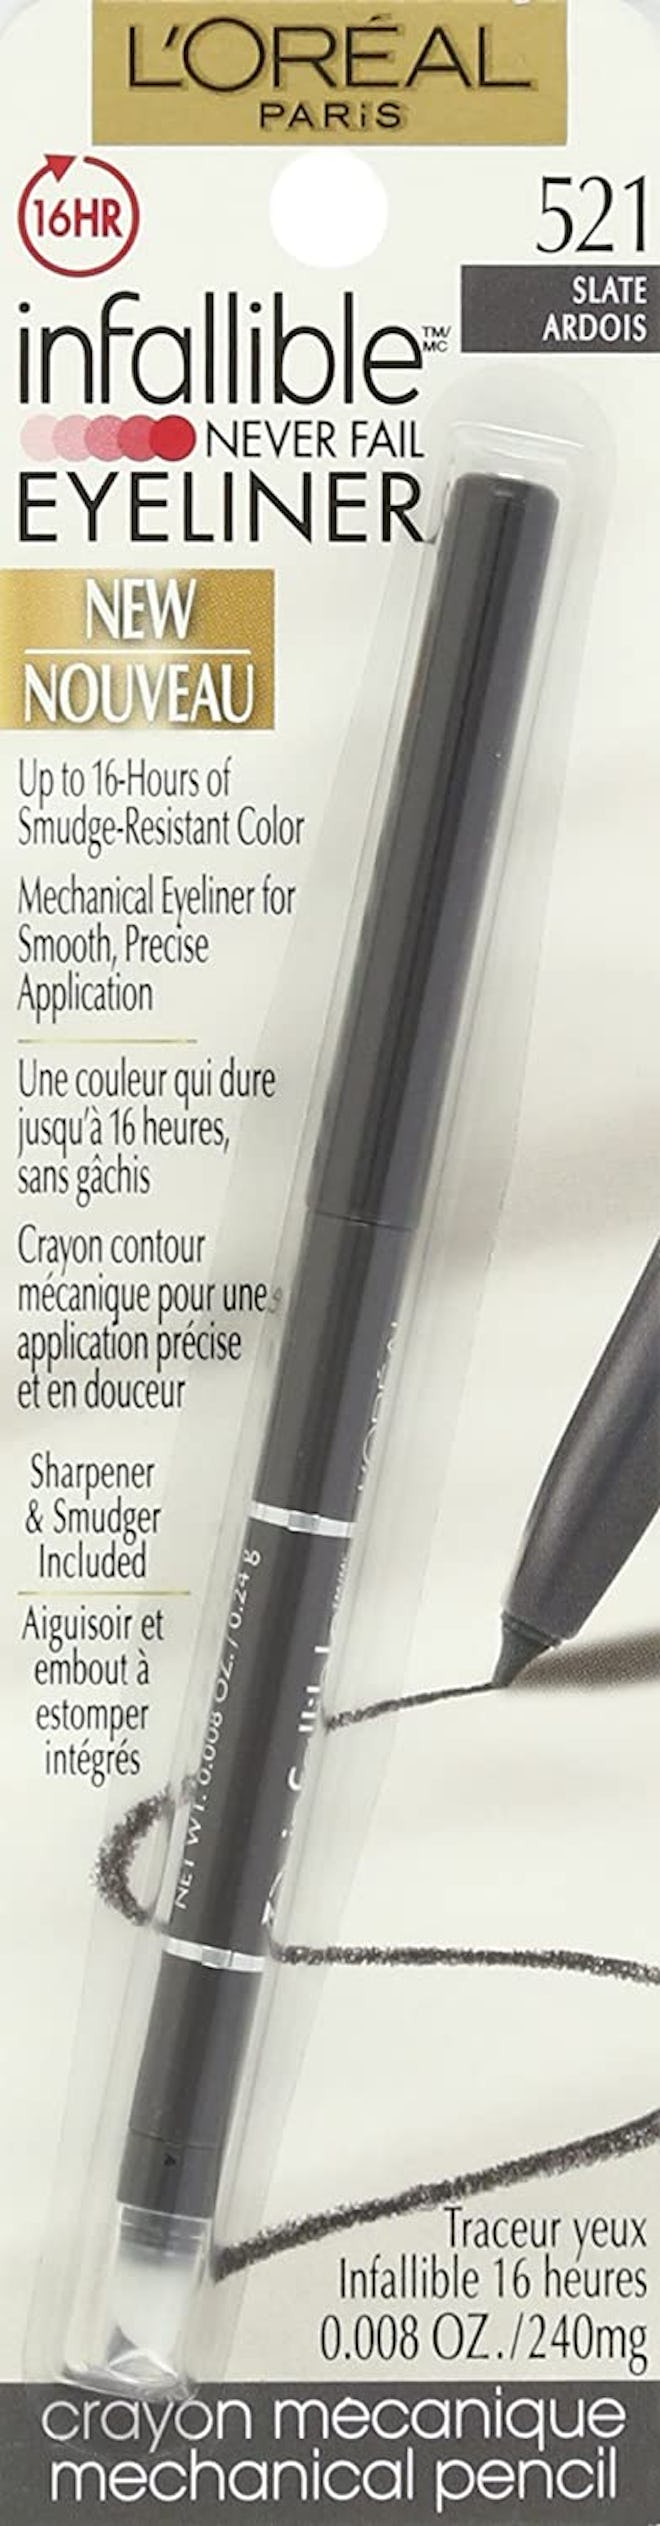 L'Oreal Paris Infallible Eyeliner Pencil